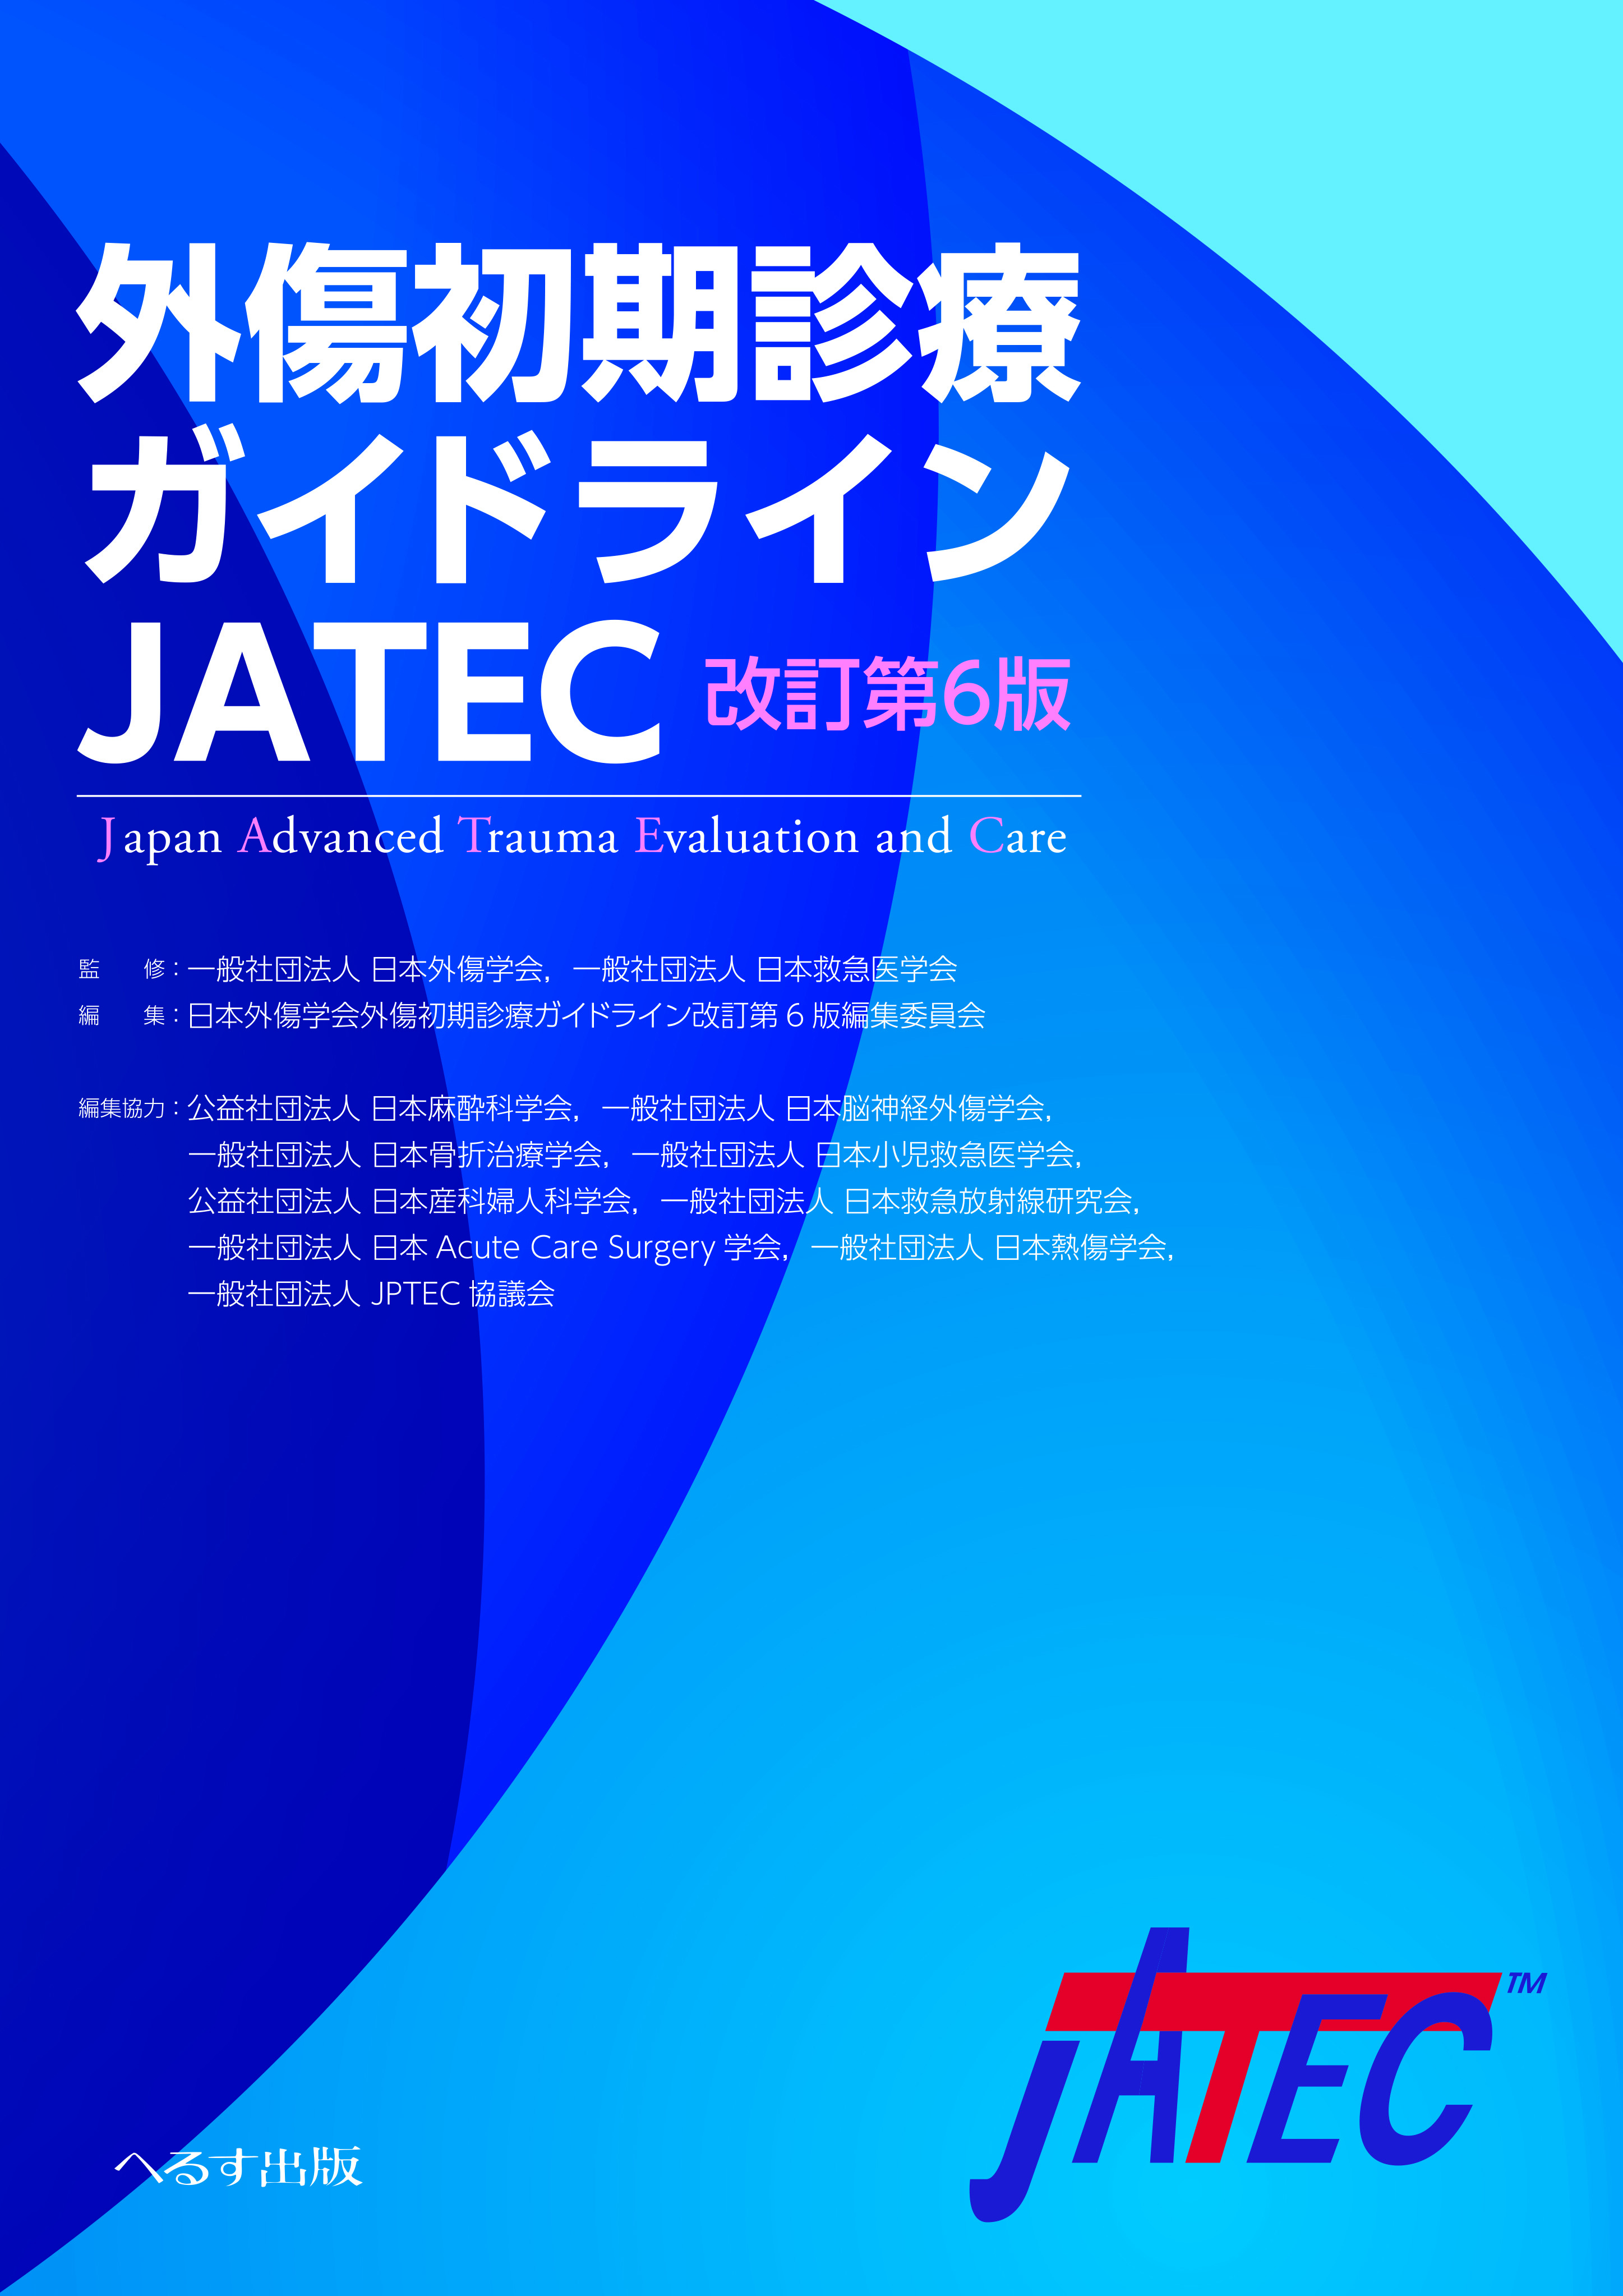 JATECコース (JTCR-日本外傷診療研究機構-)